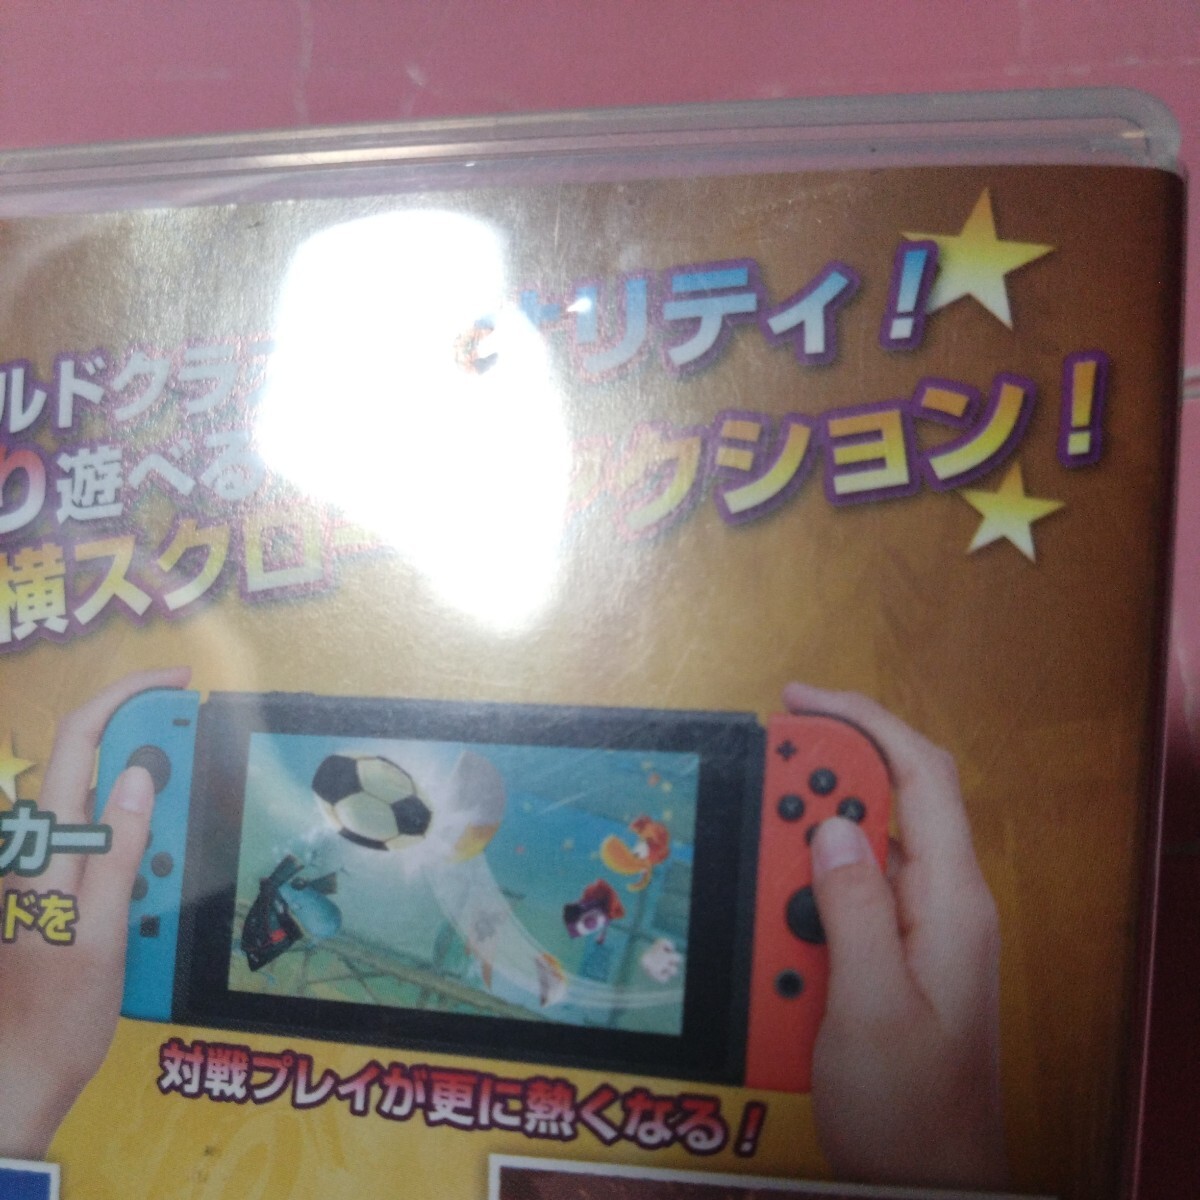 【Switch】 レイマン レジェンド for Nintendo Switch